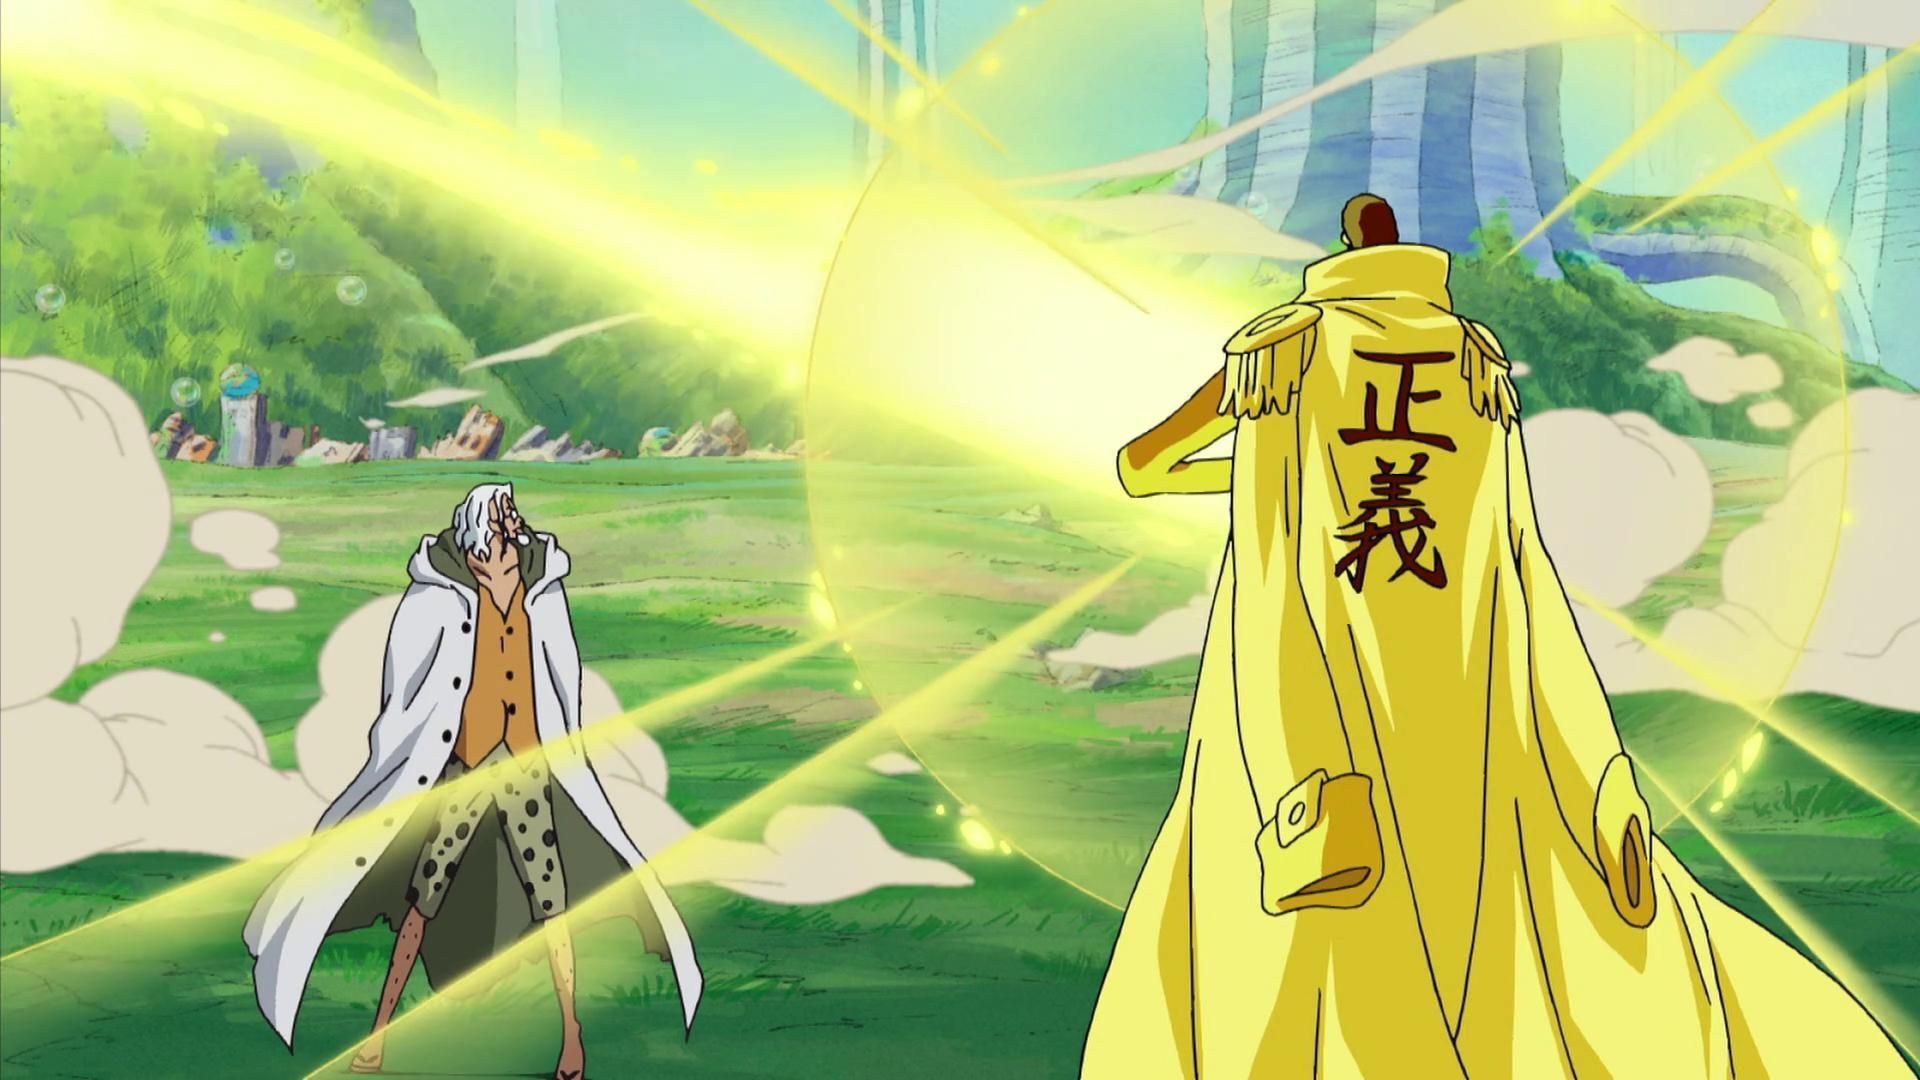 Kizaru using the Glint-Glint Fruit against Silvers Rayleigh (Image via Toei Animation, One Piece)